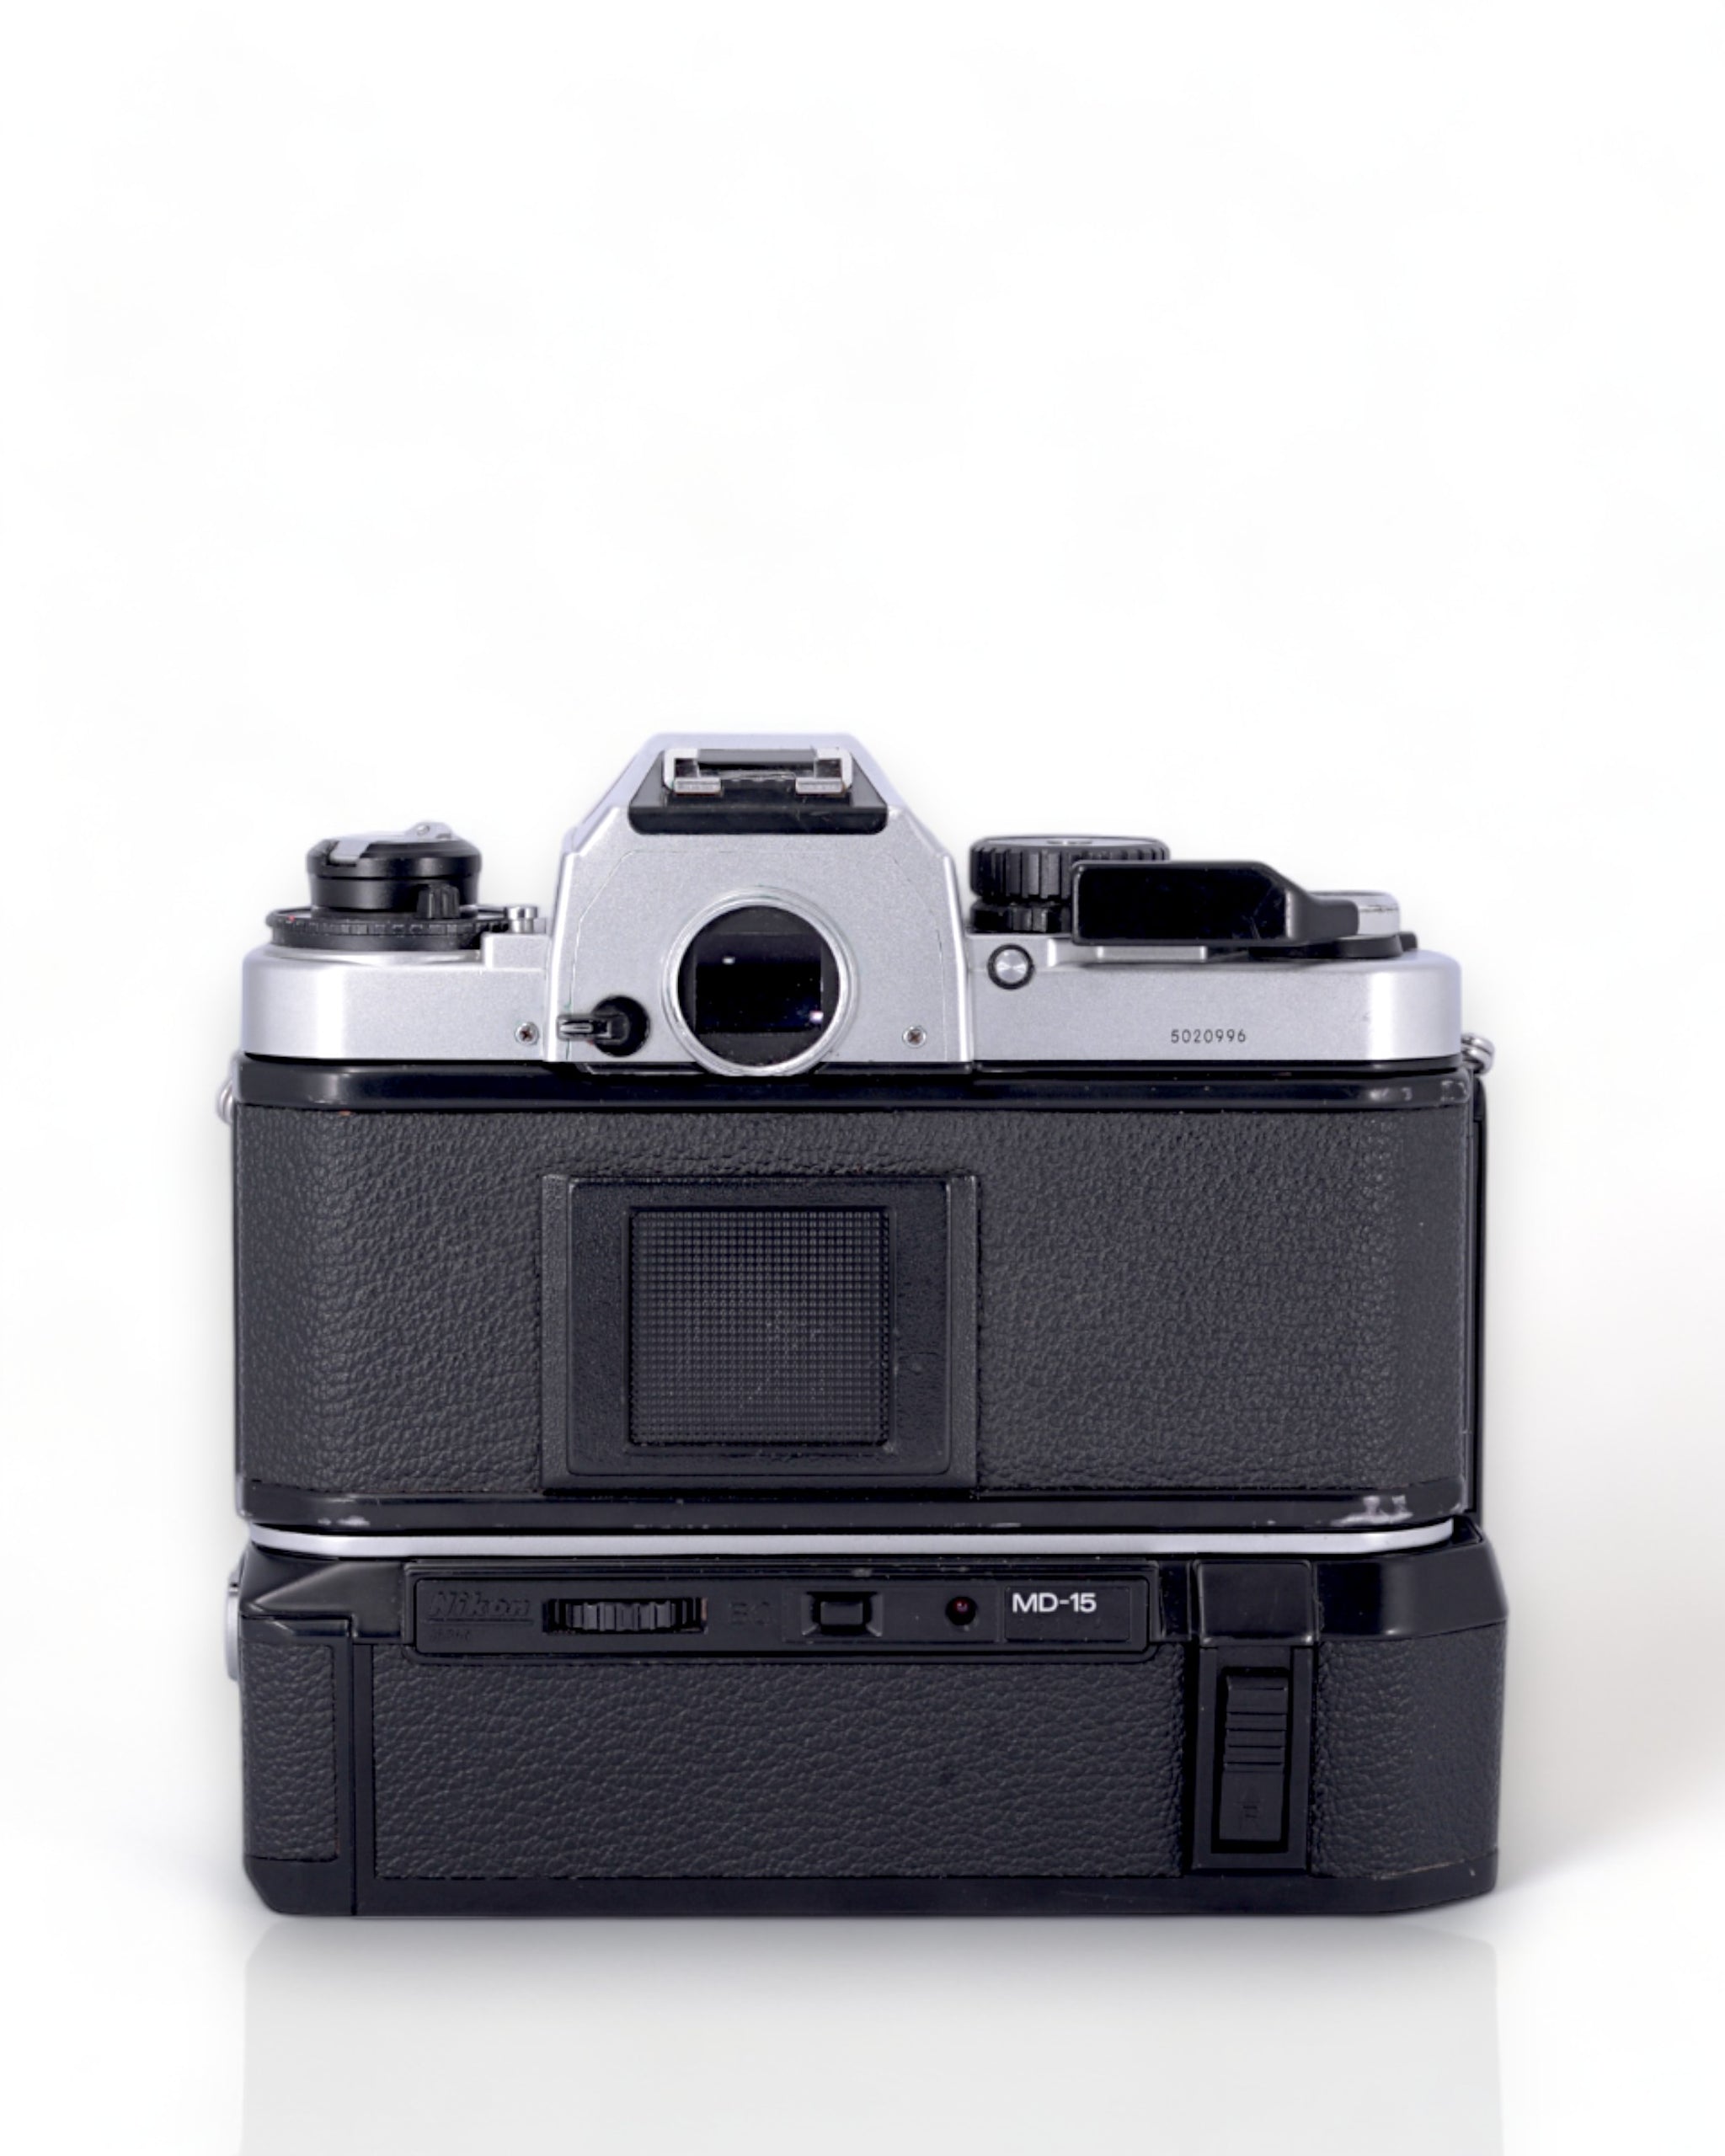 Nikon FA 35mm SLR Film Camera with motor drive body only - Mori 